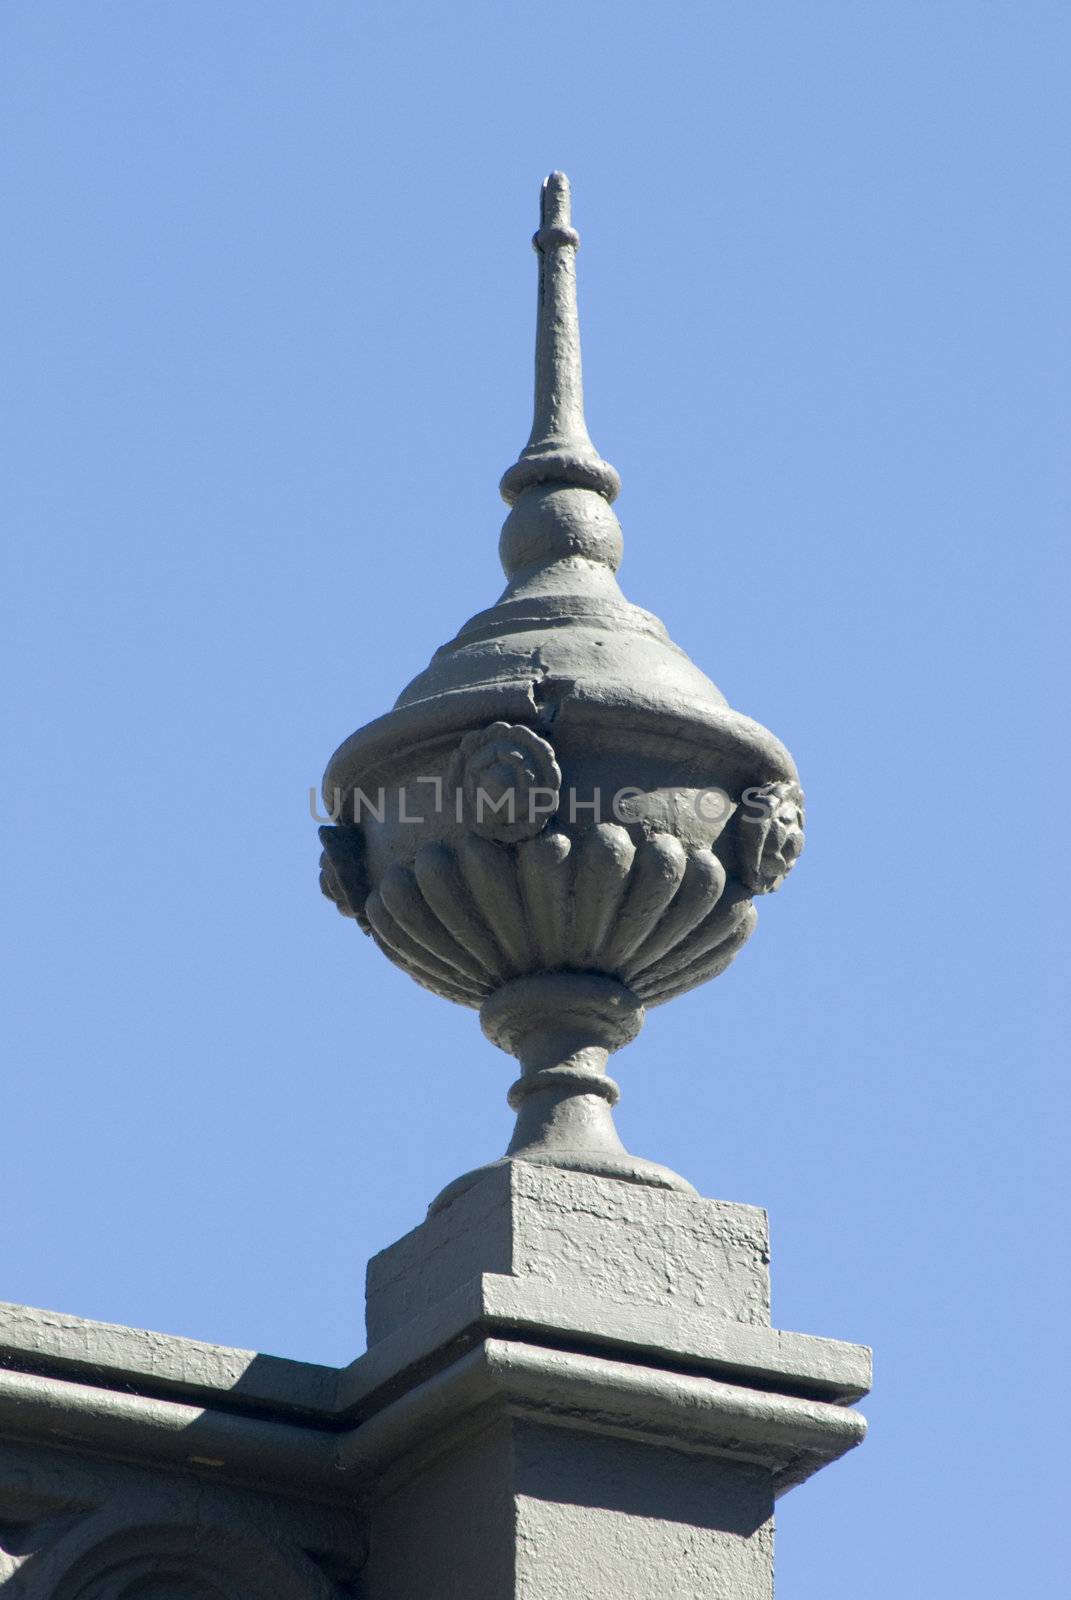 an ornamental concrete earn on top of an old building, sydney, australia